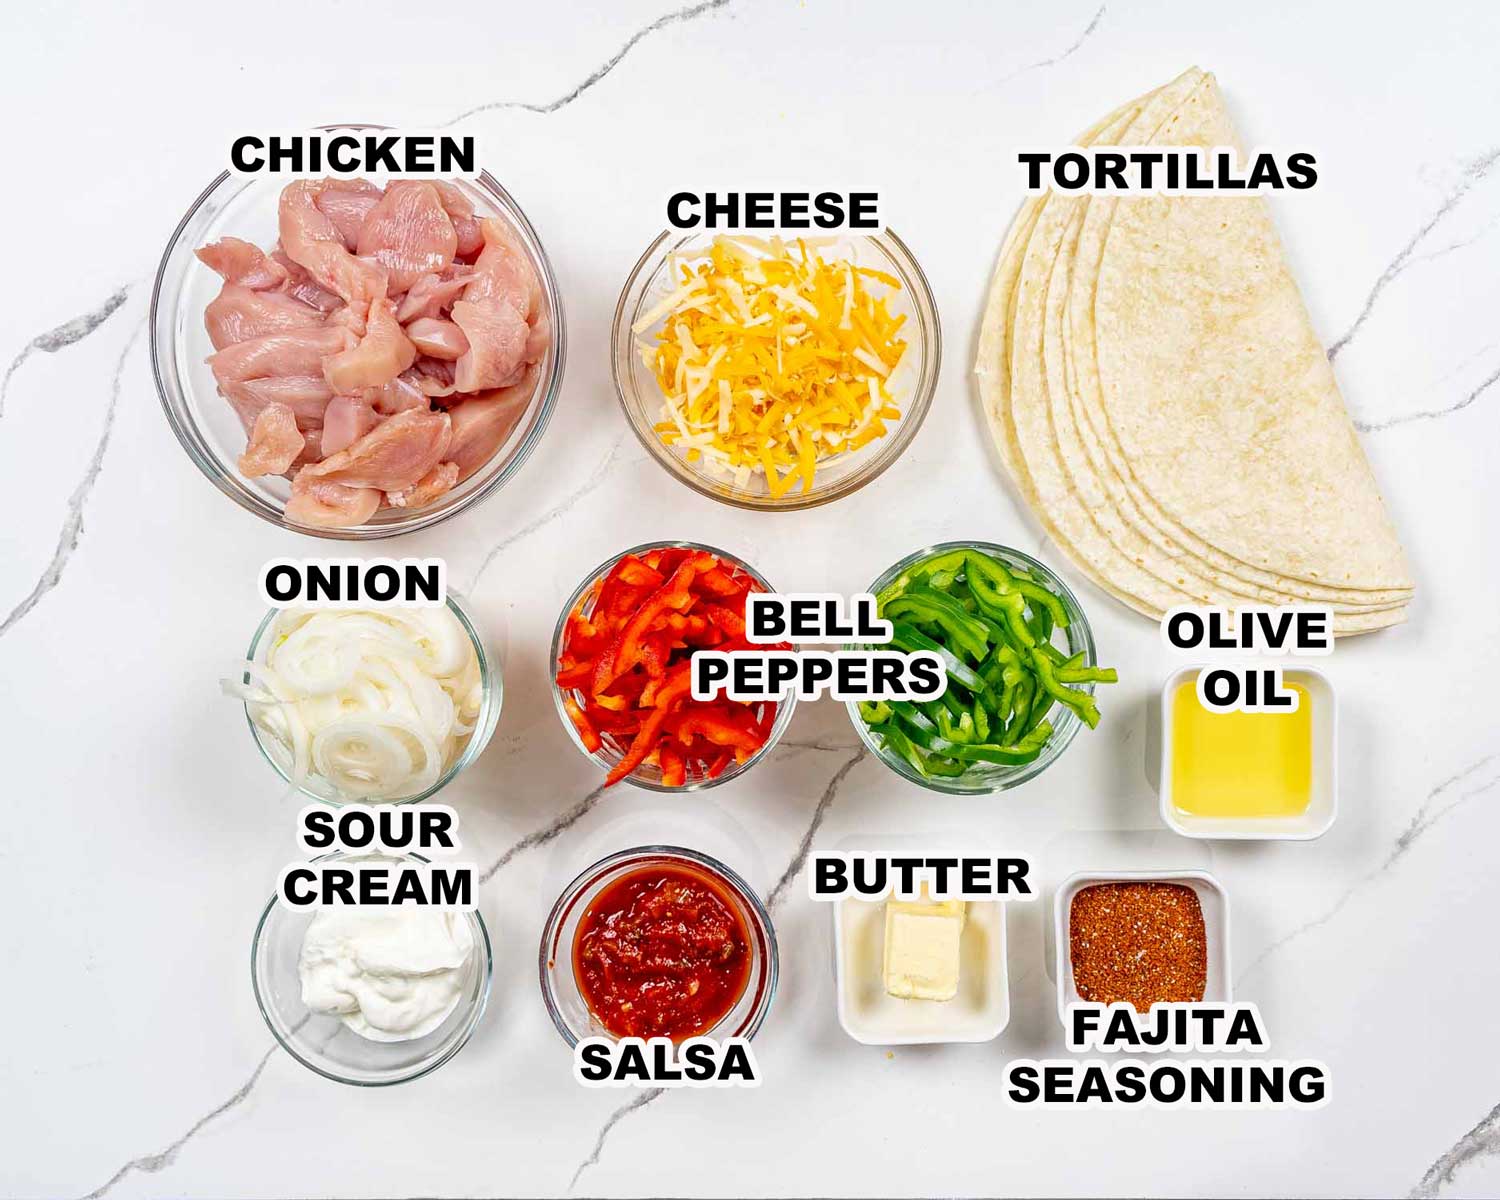 ingredients needed to make chicken fajita quesadillas.